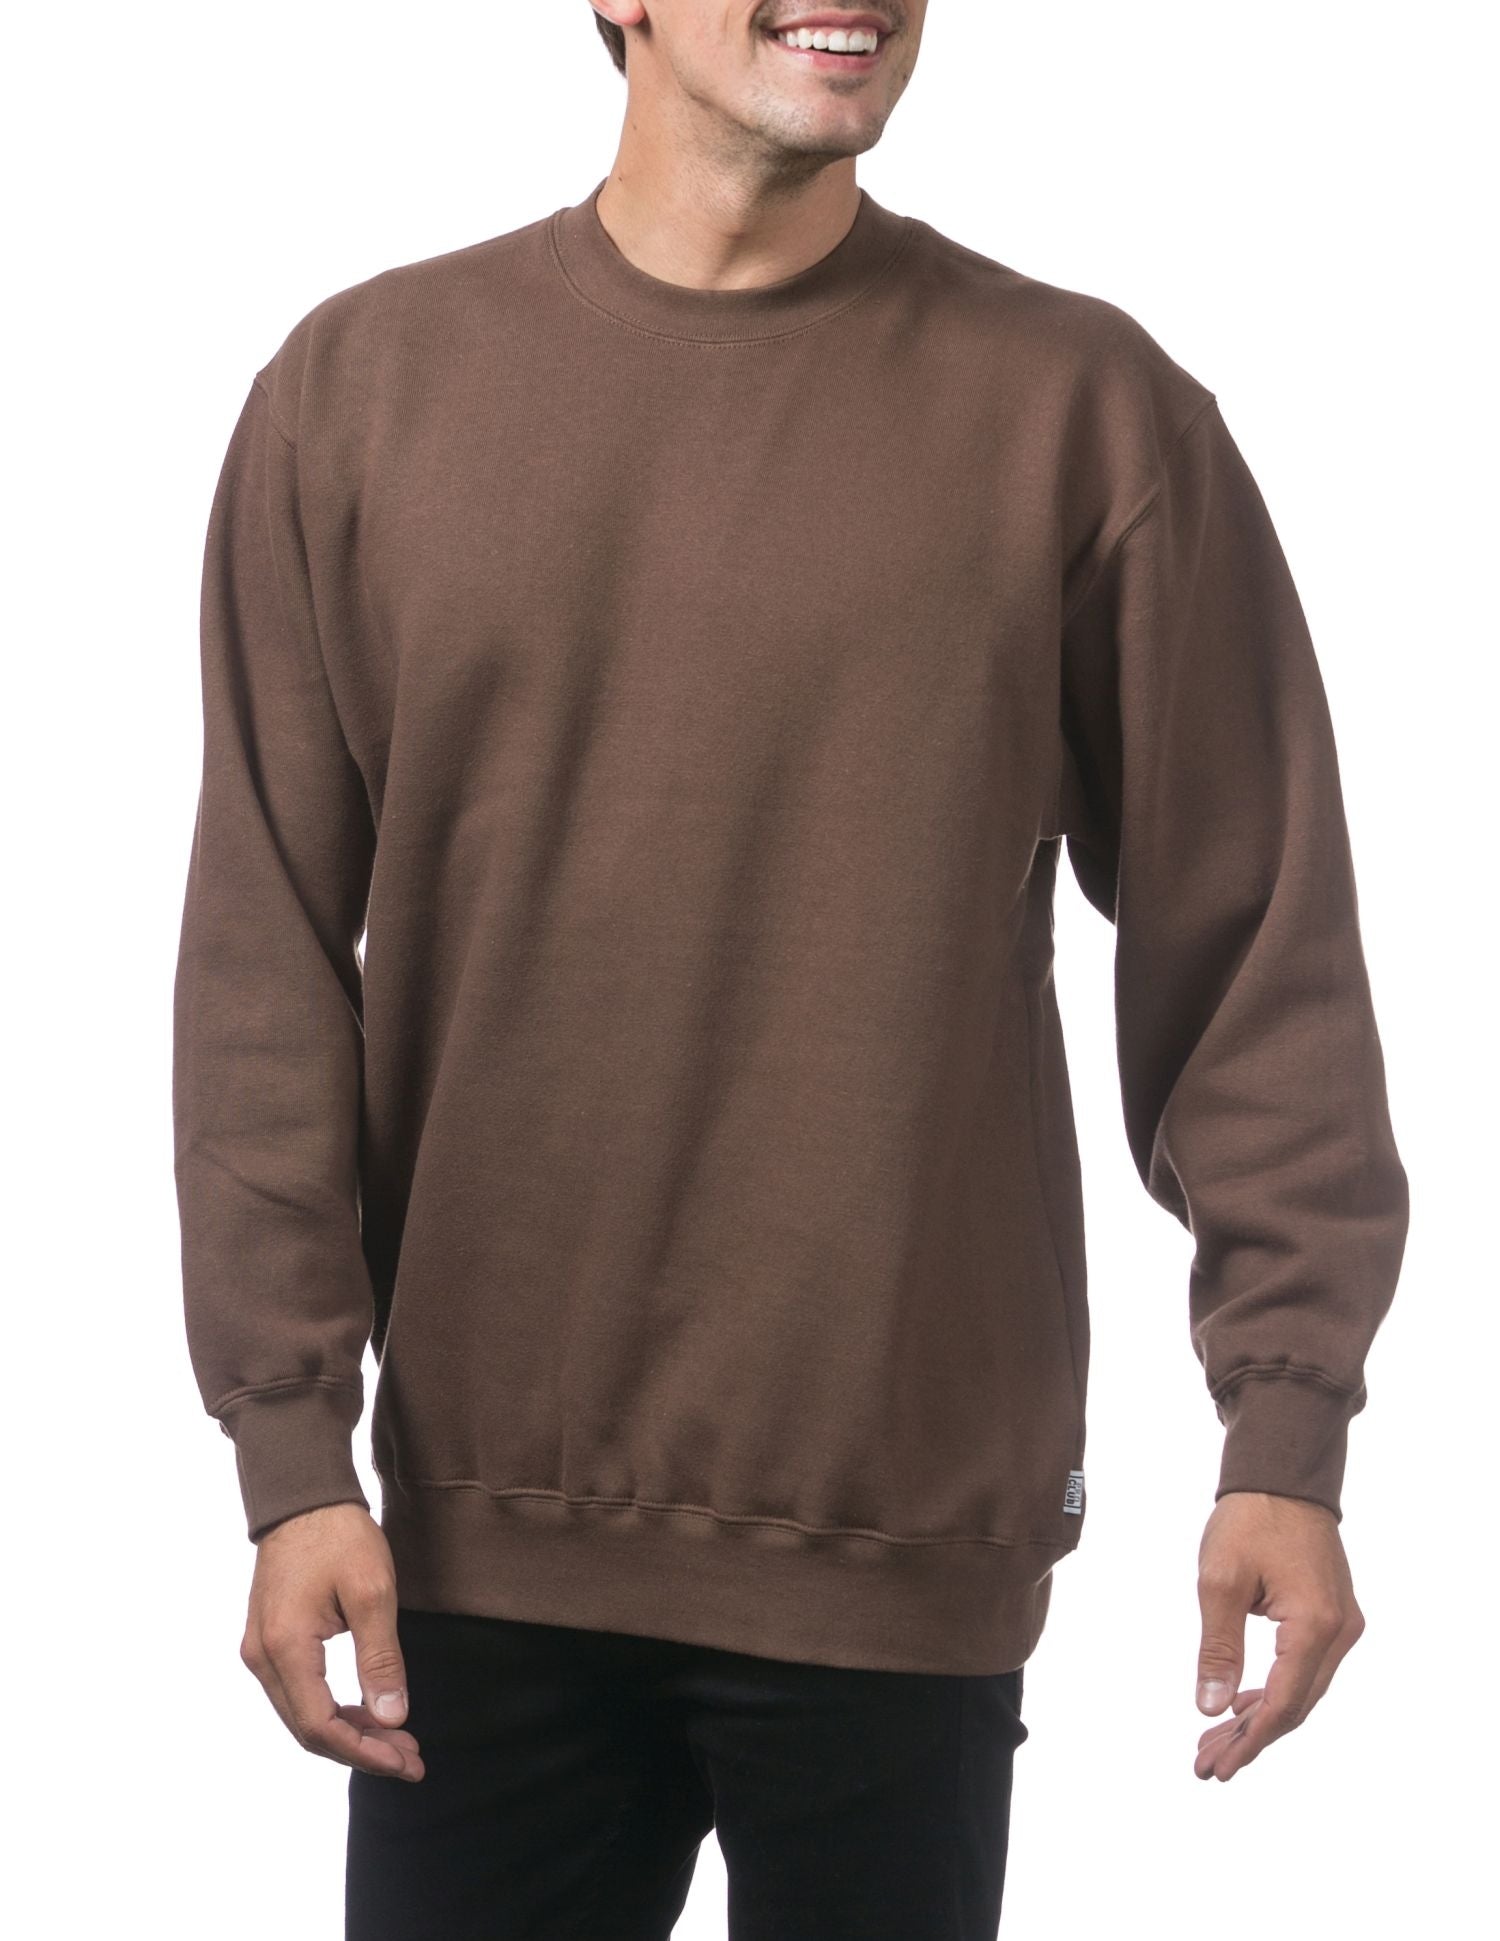 Pro Club Men's Heavyweight Crew Neck Fleece Pullover Sweater - Brown - Large - Pro-Distributing